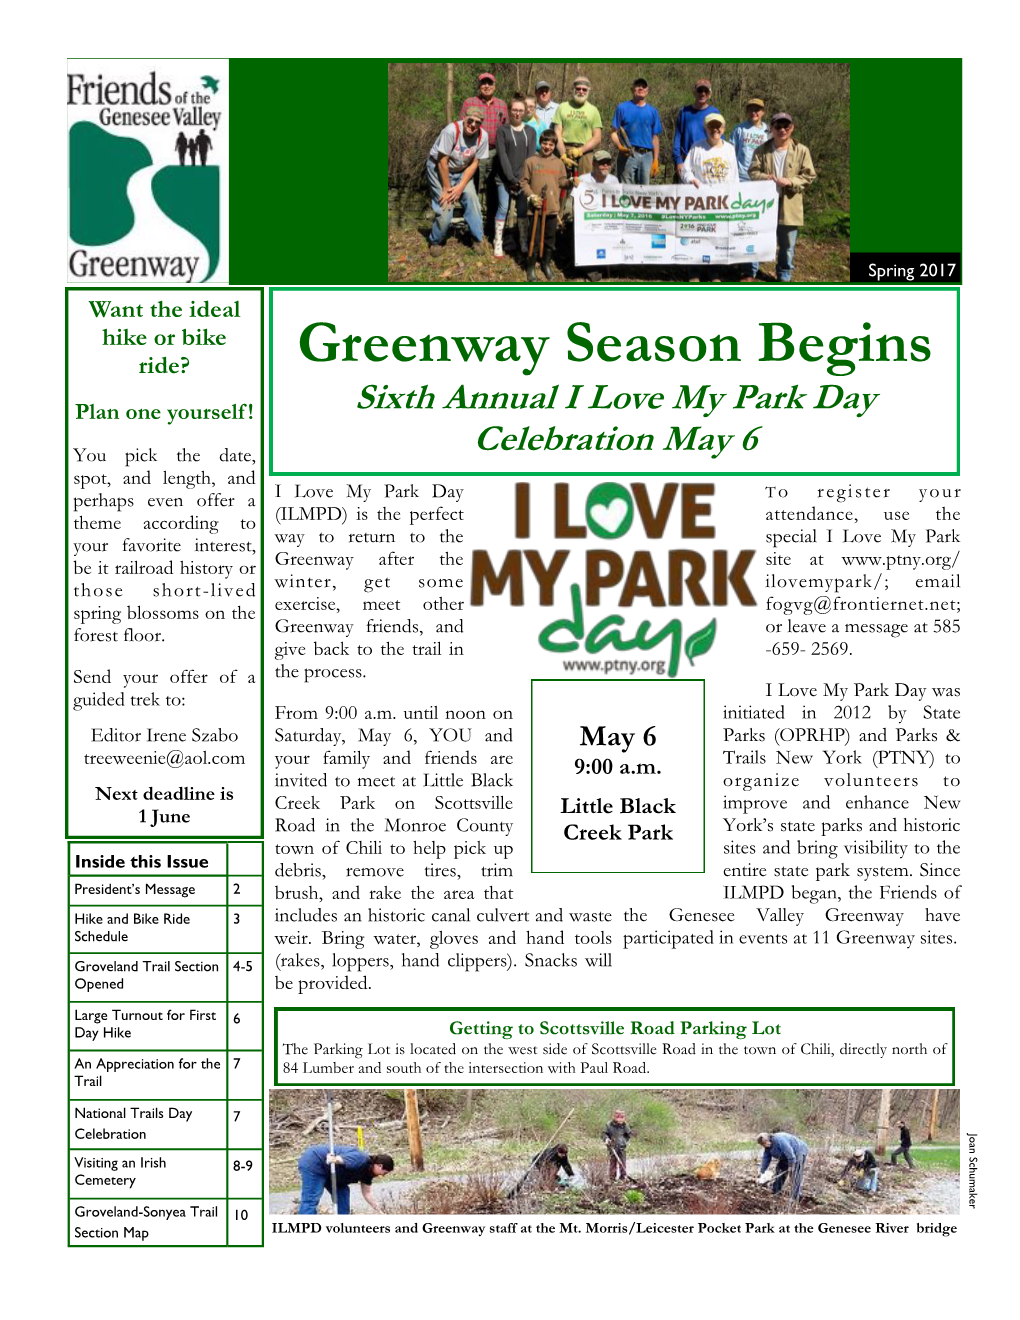 Spring 2017 Greenway News